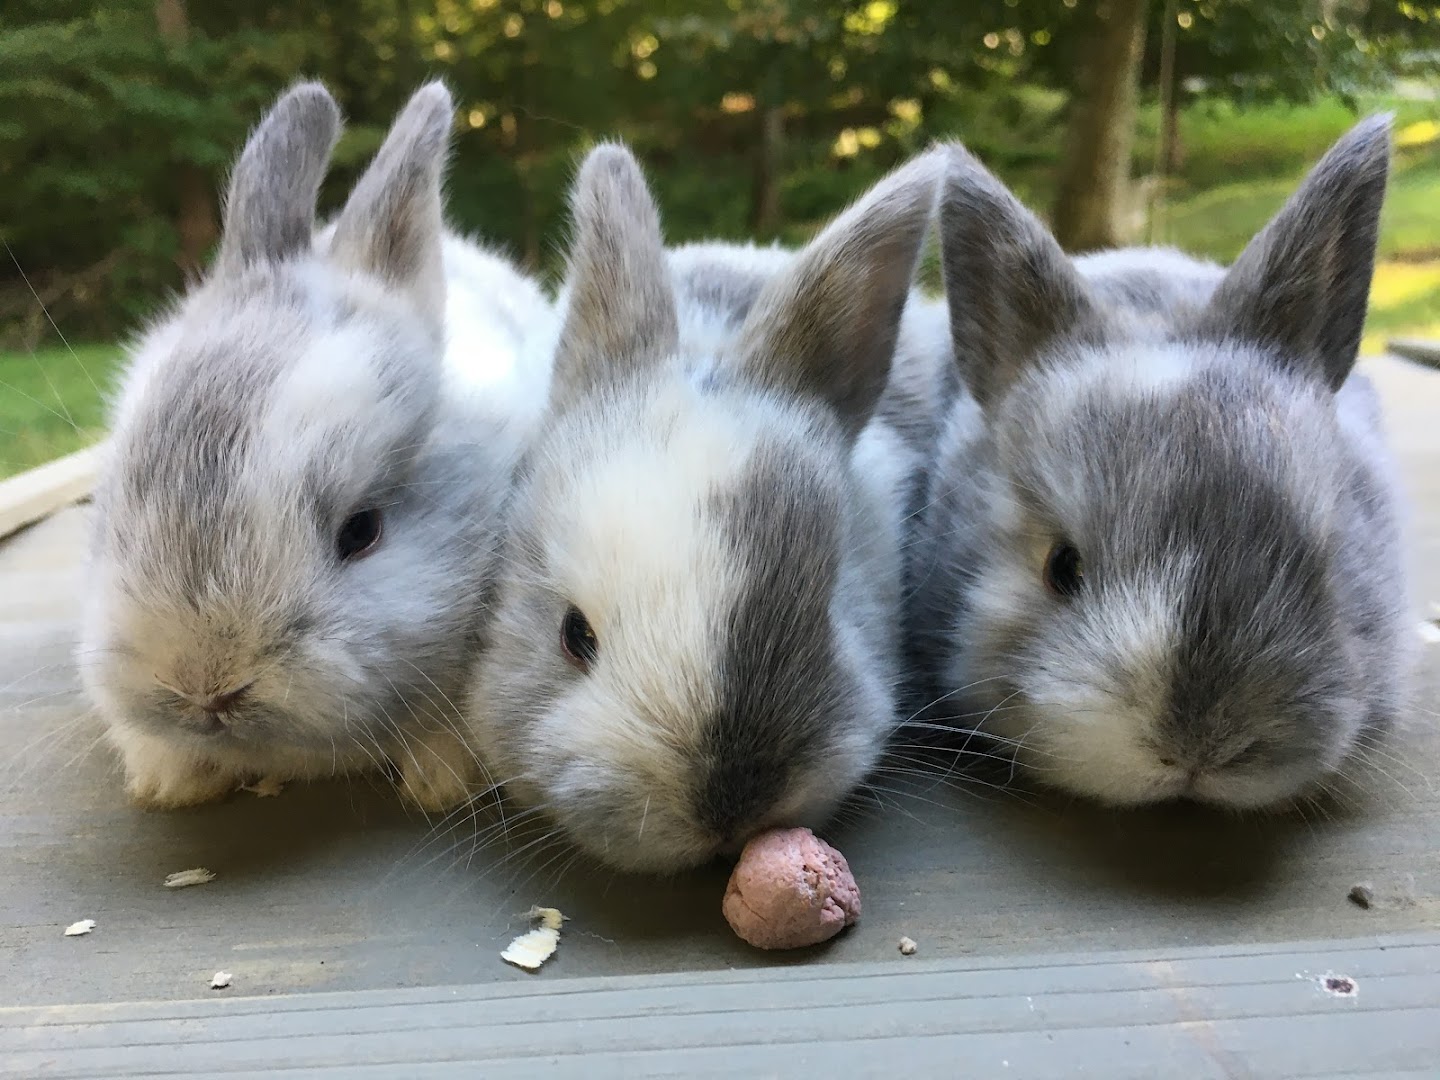 Snugglebuns Rabbitry and Rescue